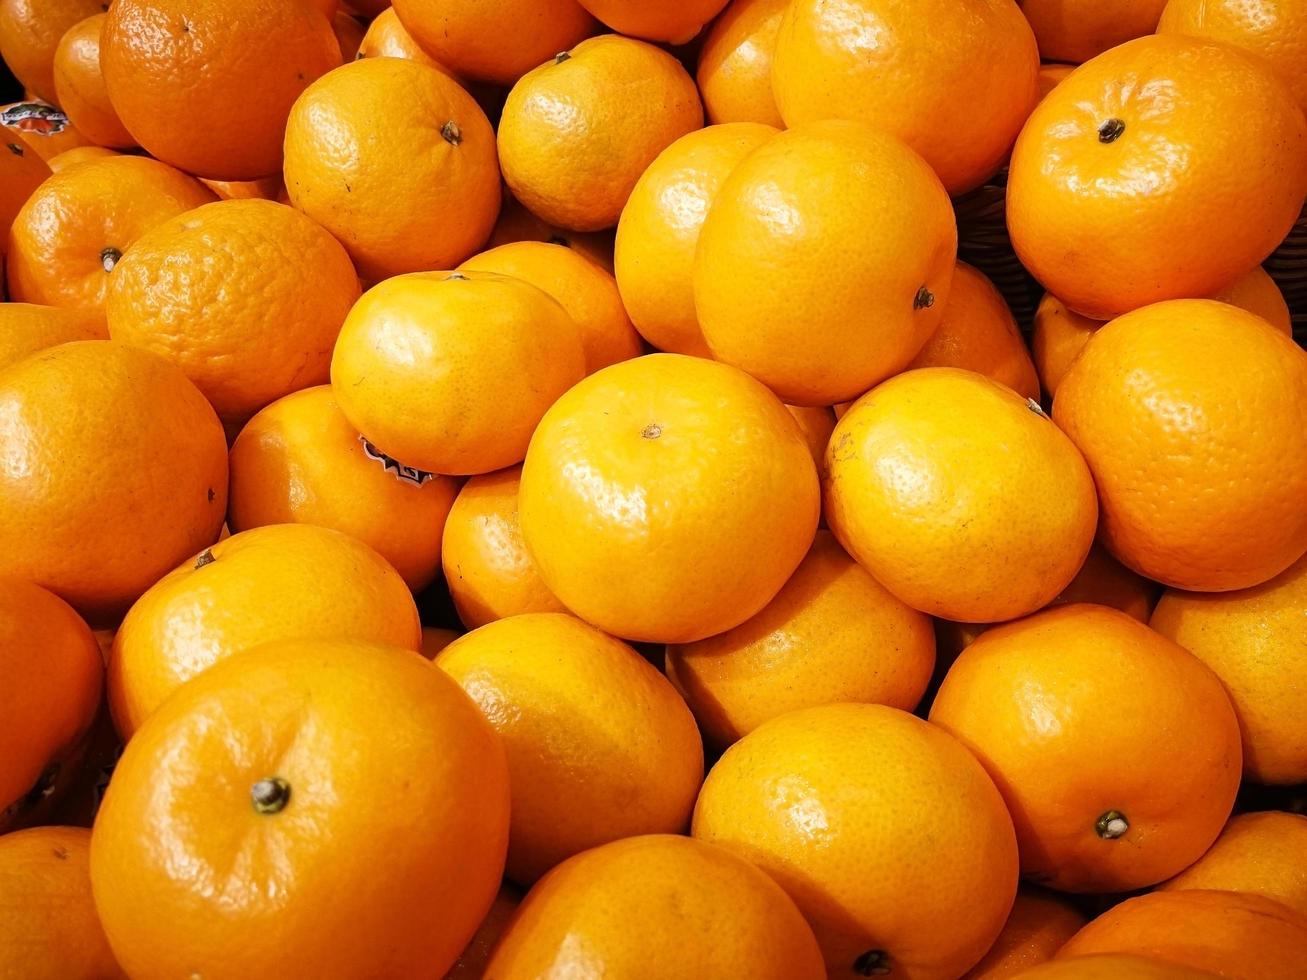 Northeast China Winter Seasonal Fruit Citrus. Mandarin oranges in market photo